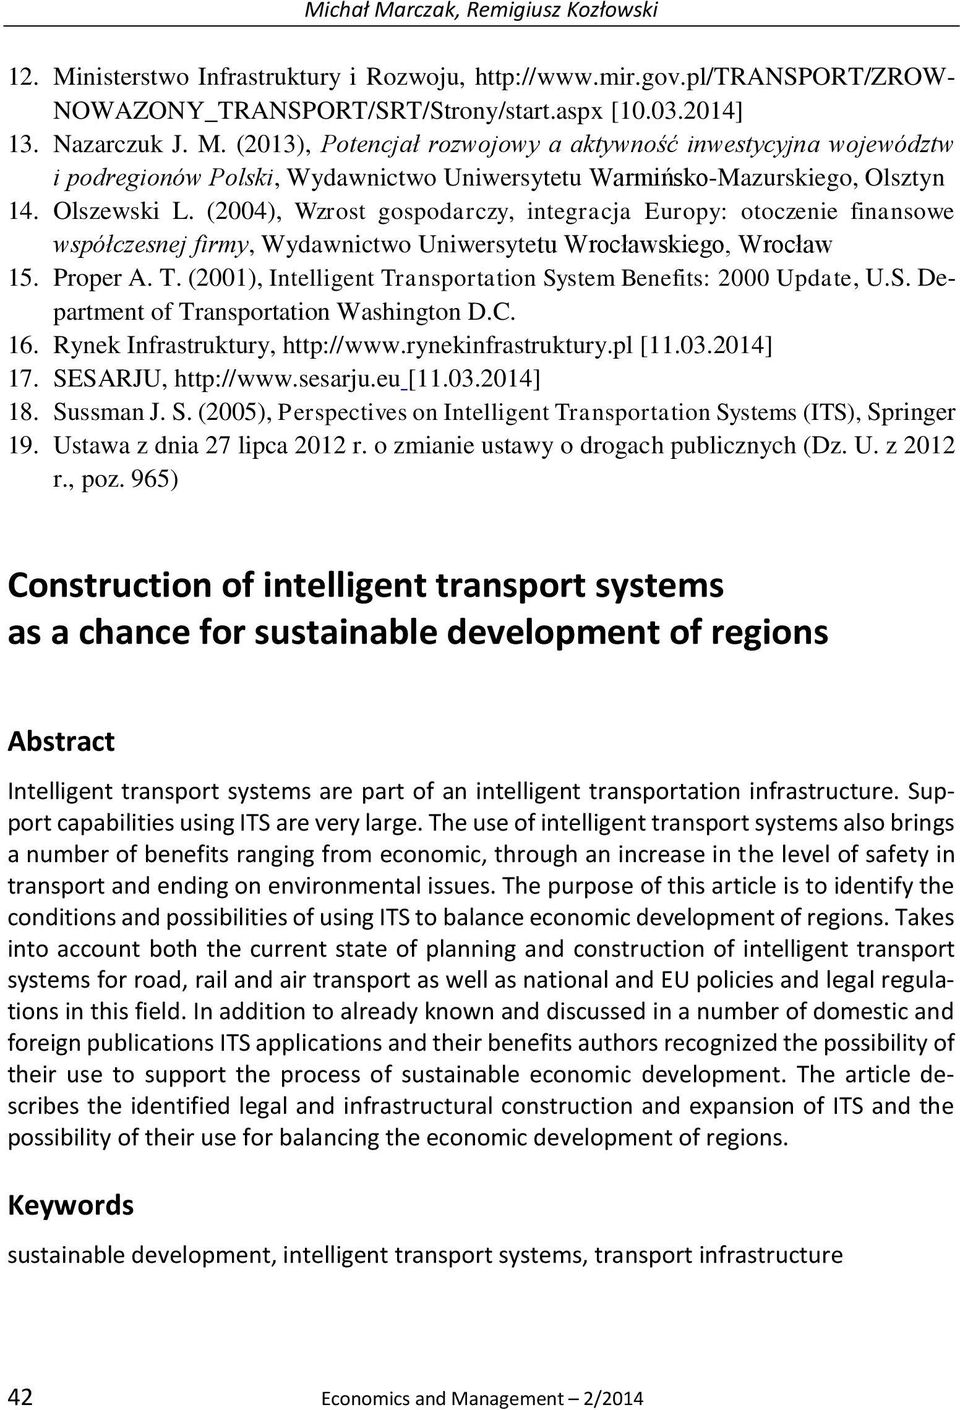 (2001), Intelligent Transportation System Benefits: 2000 Update, U.S. Department of Transportation Washington D.C. 16. Rynek Infrastruktury, http://www.rynekinfrastruktury.pl [11.03.2014] 17.